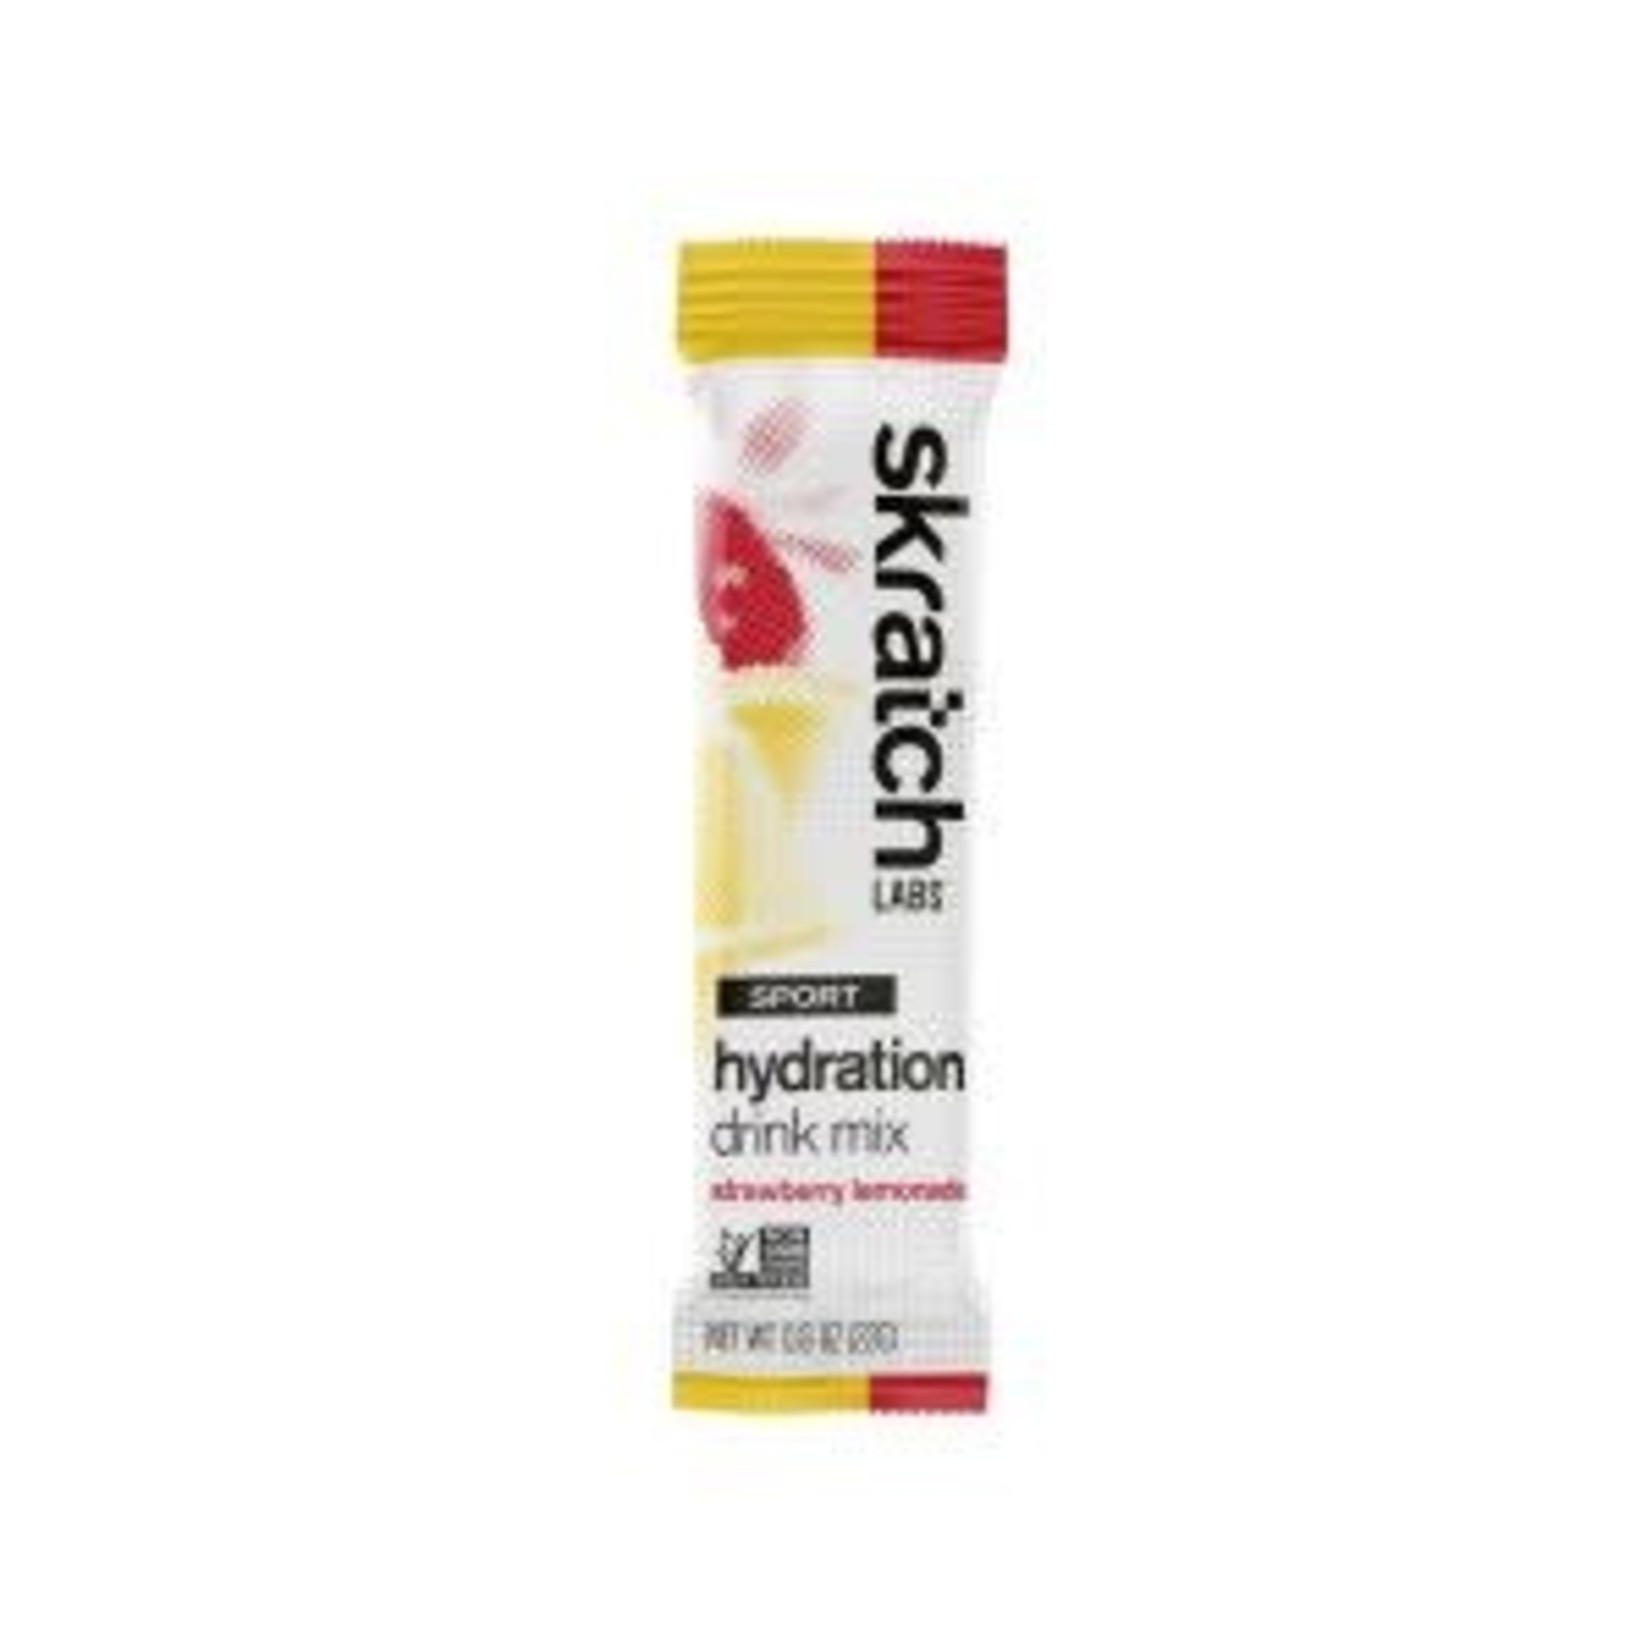 Skratch Labs Hydration Sports Drink Mix